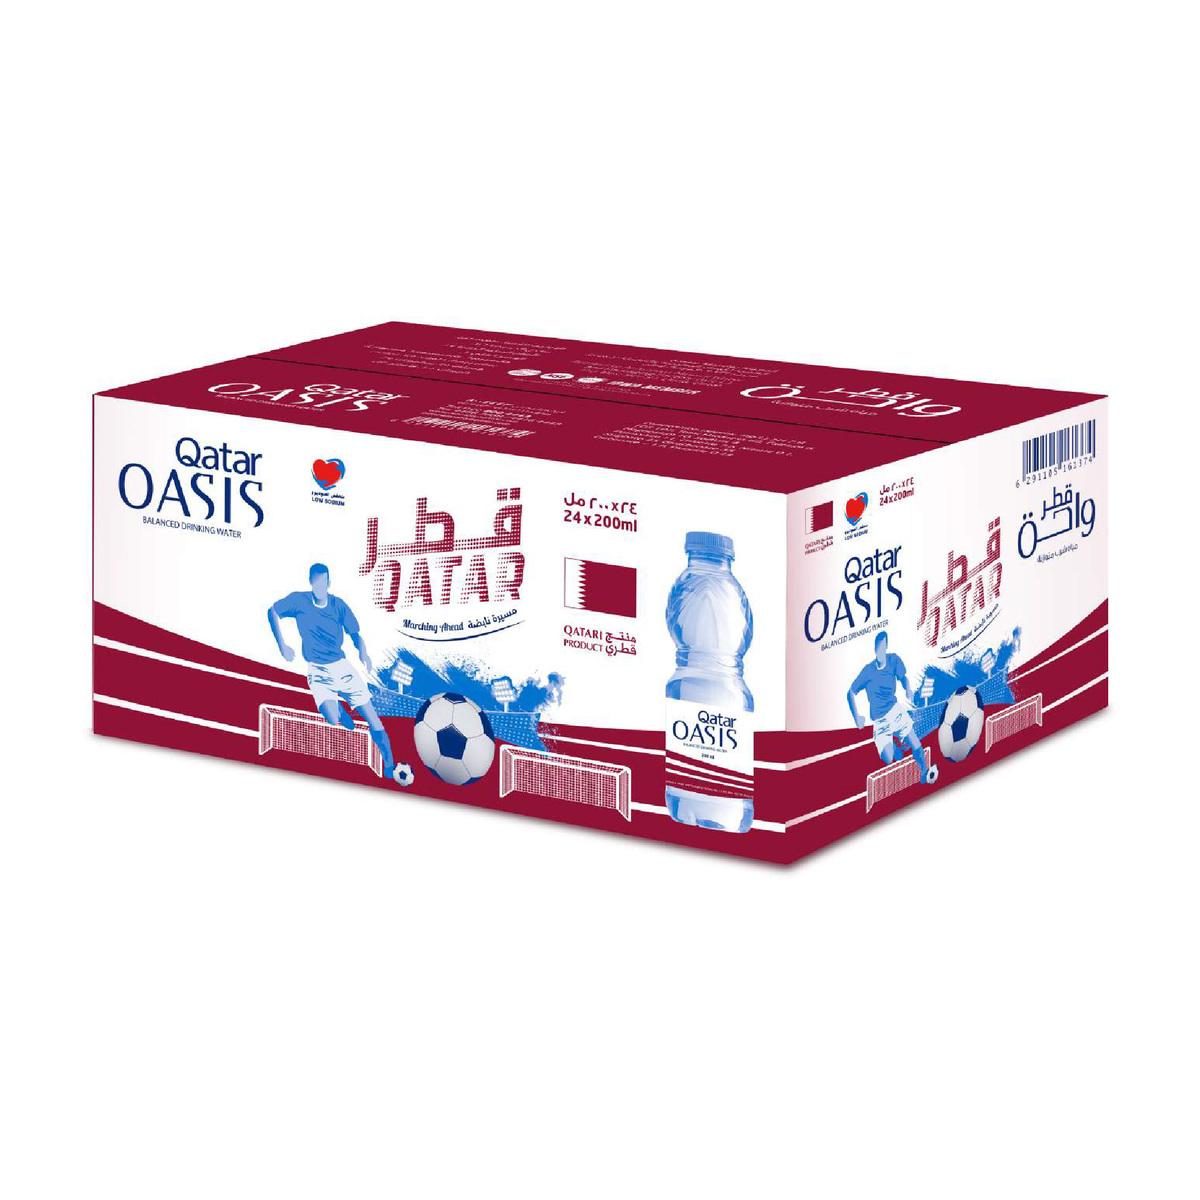 Qatar Oasis Balanced Drinking Water 30 x 200ml